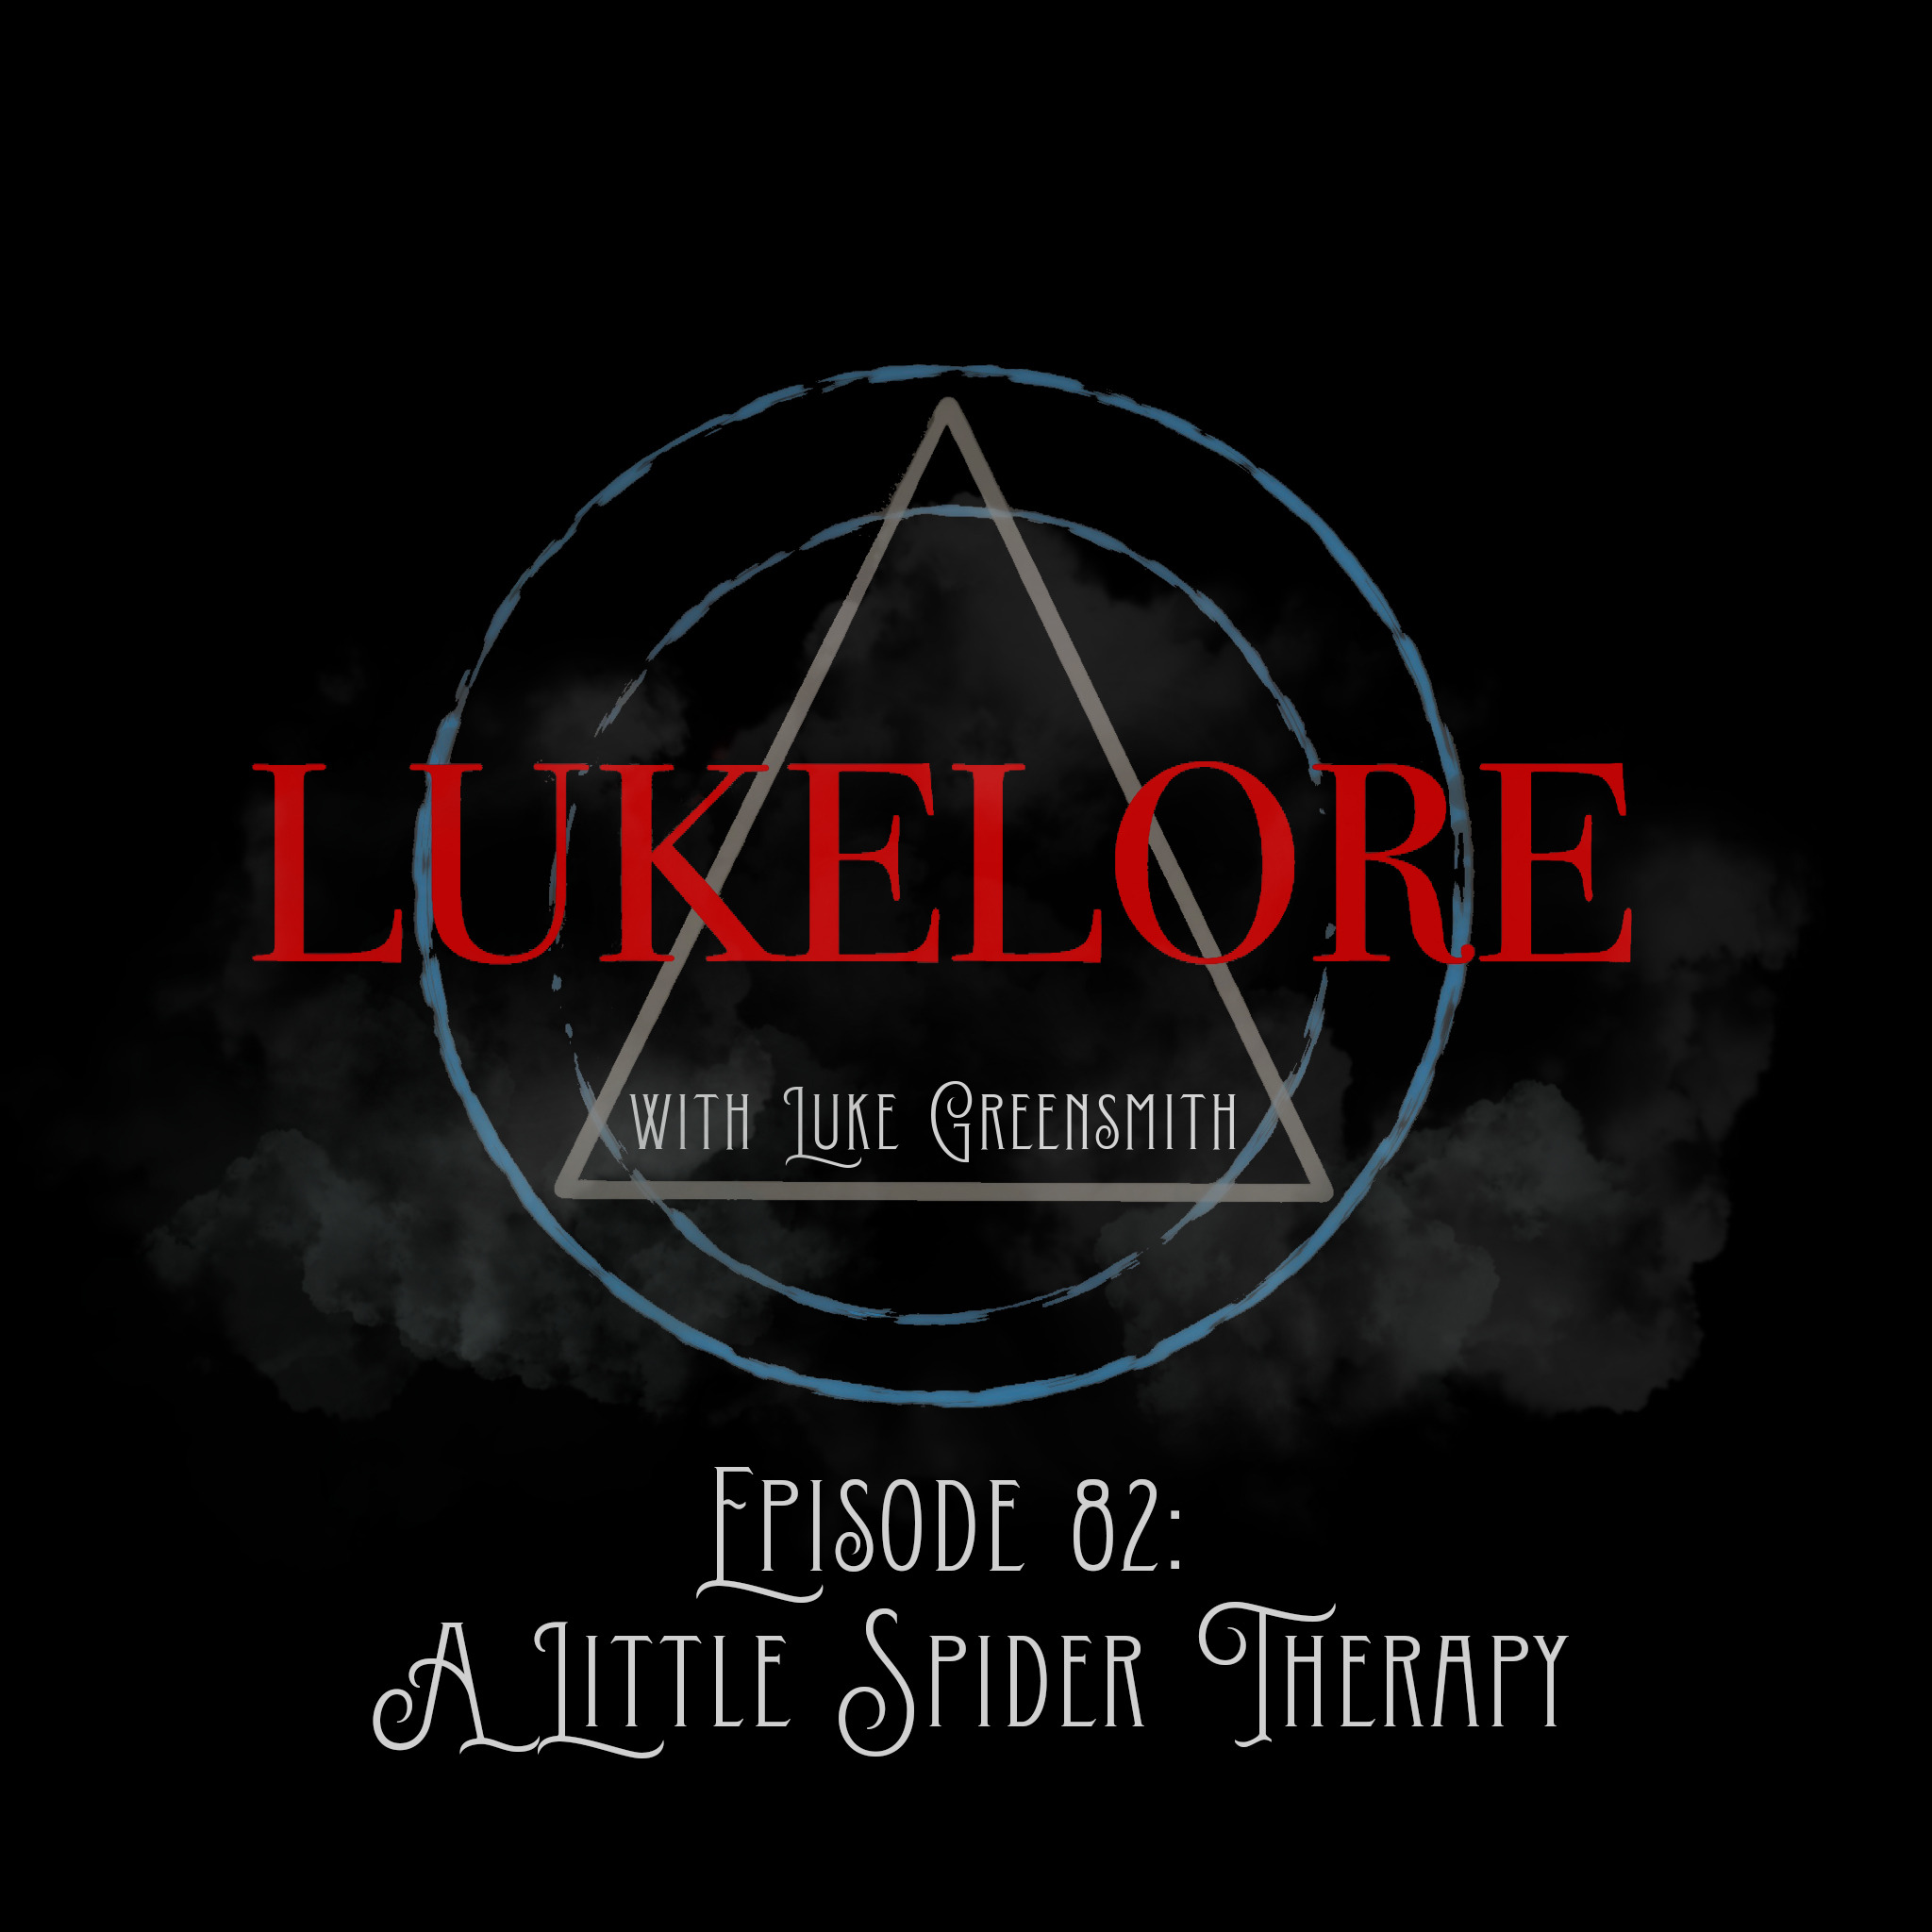 Introducing: LukeLore